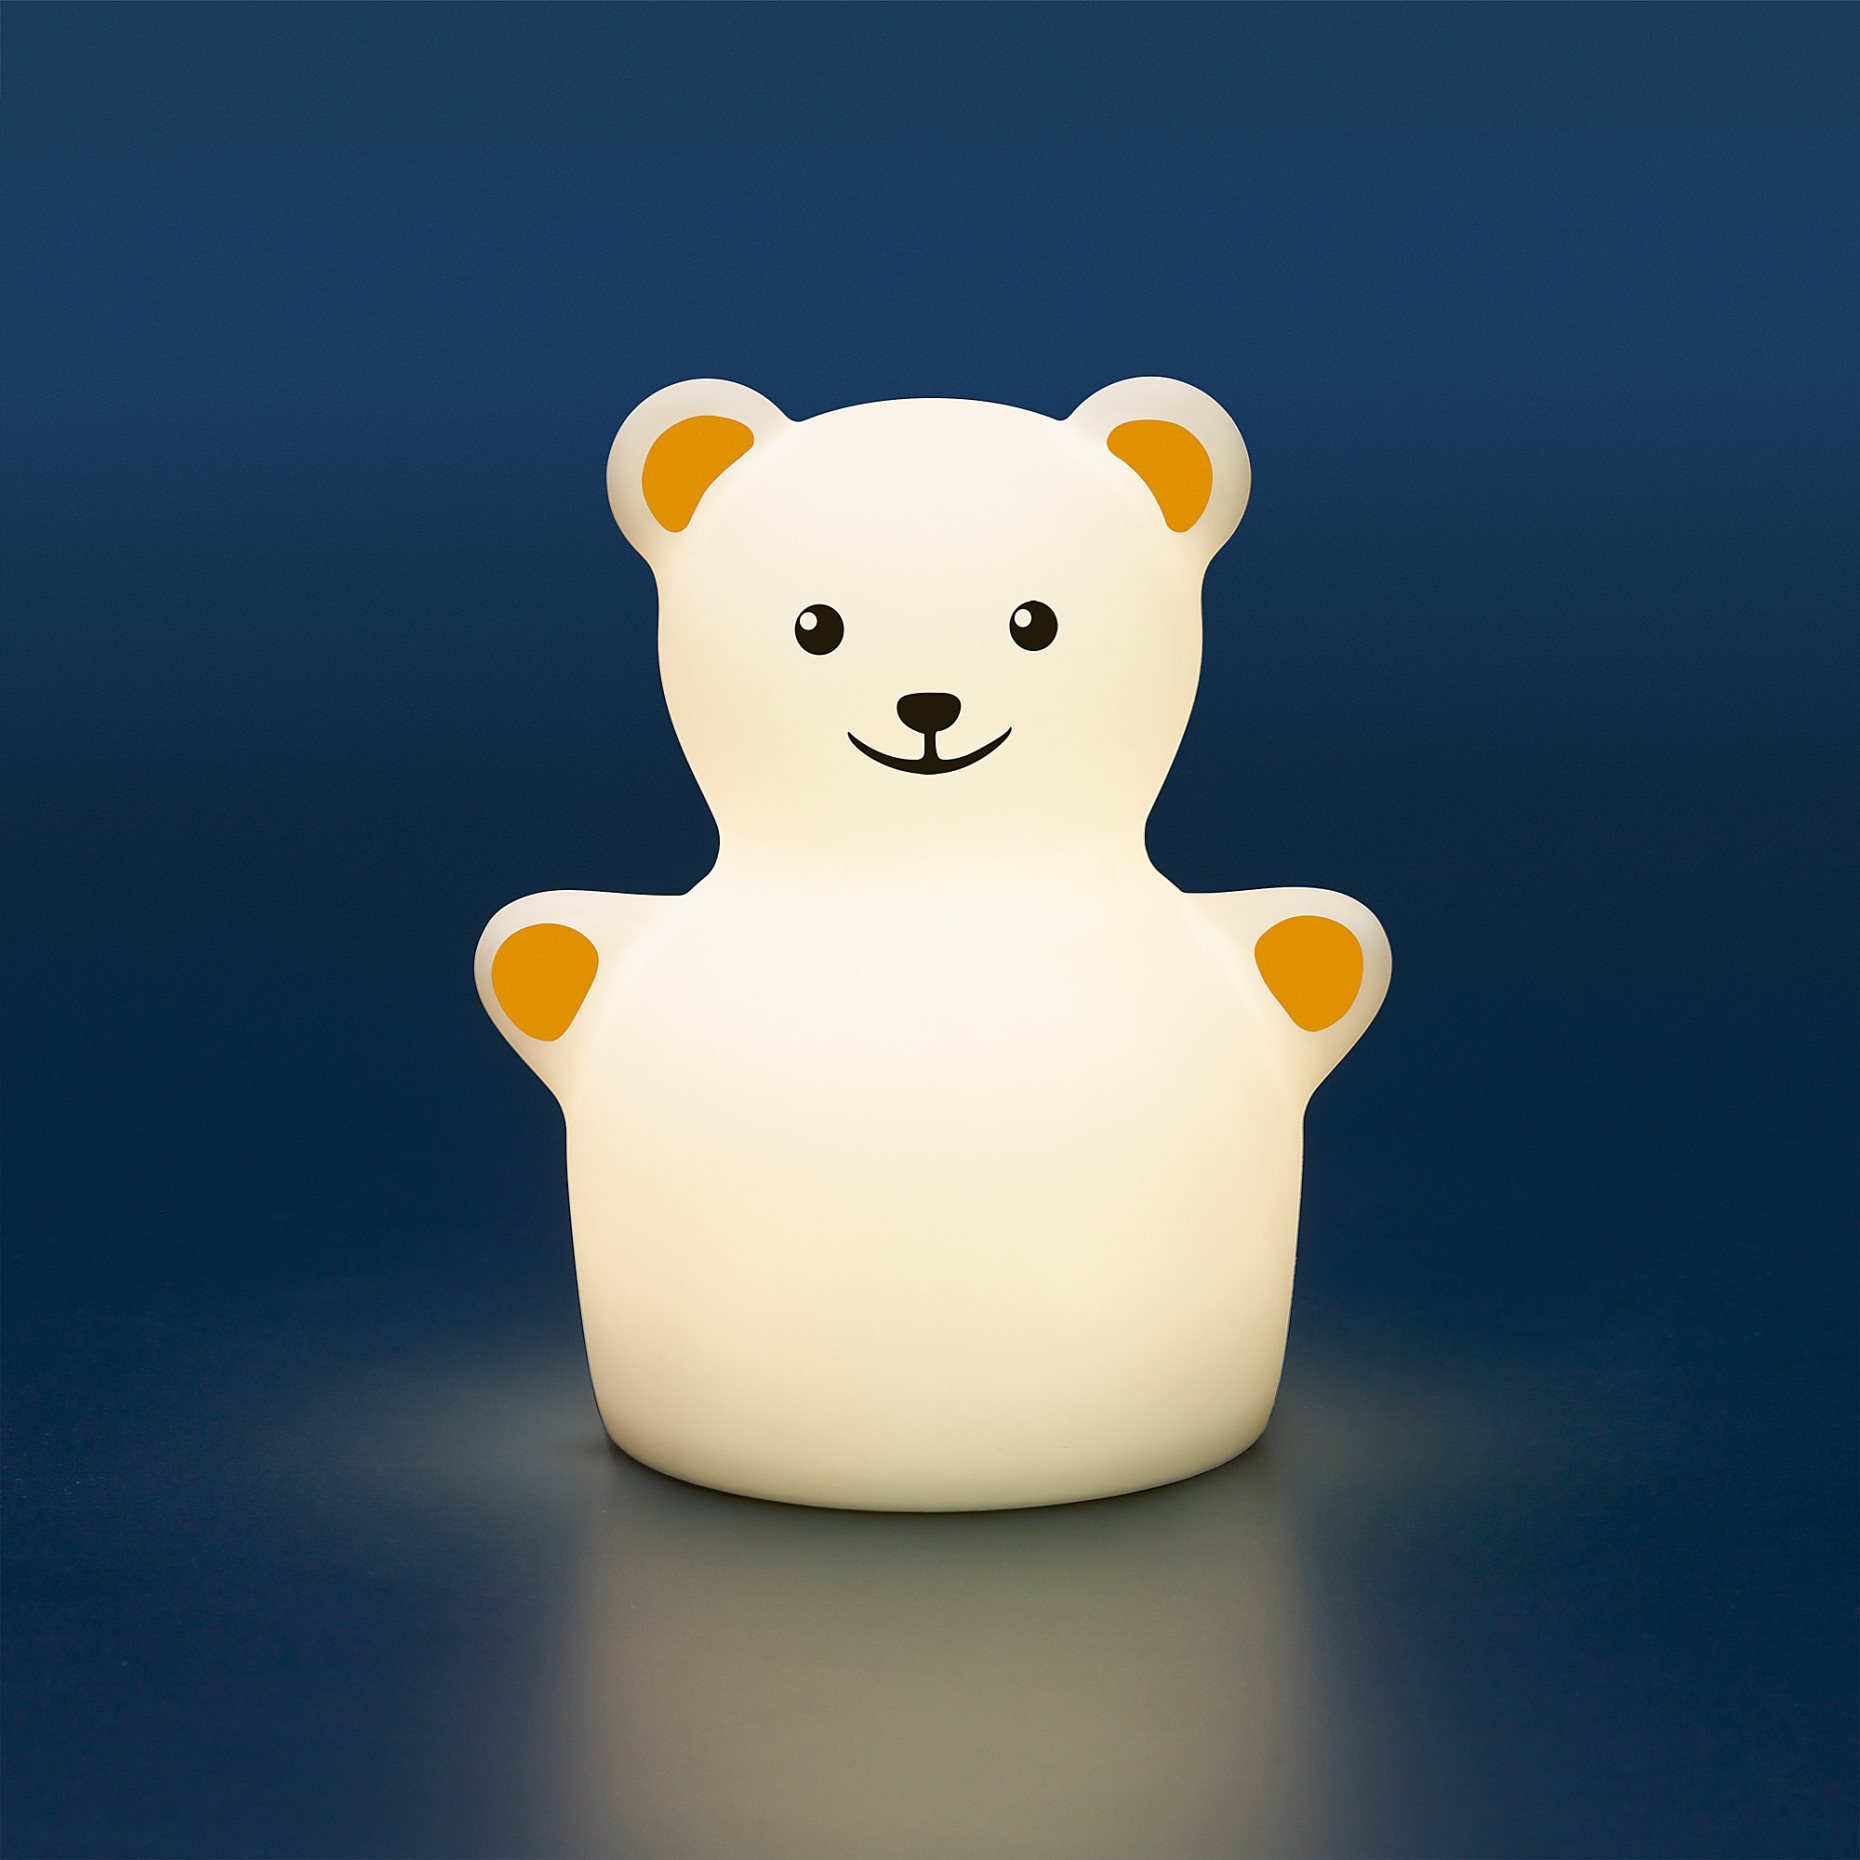 TÖVÄDER, LED нощна лампа, мечка, на батерии, 905.169.14